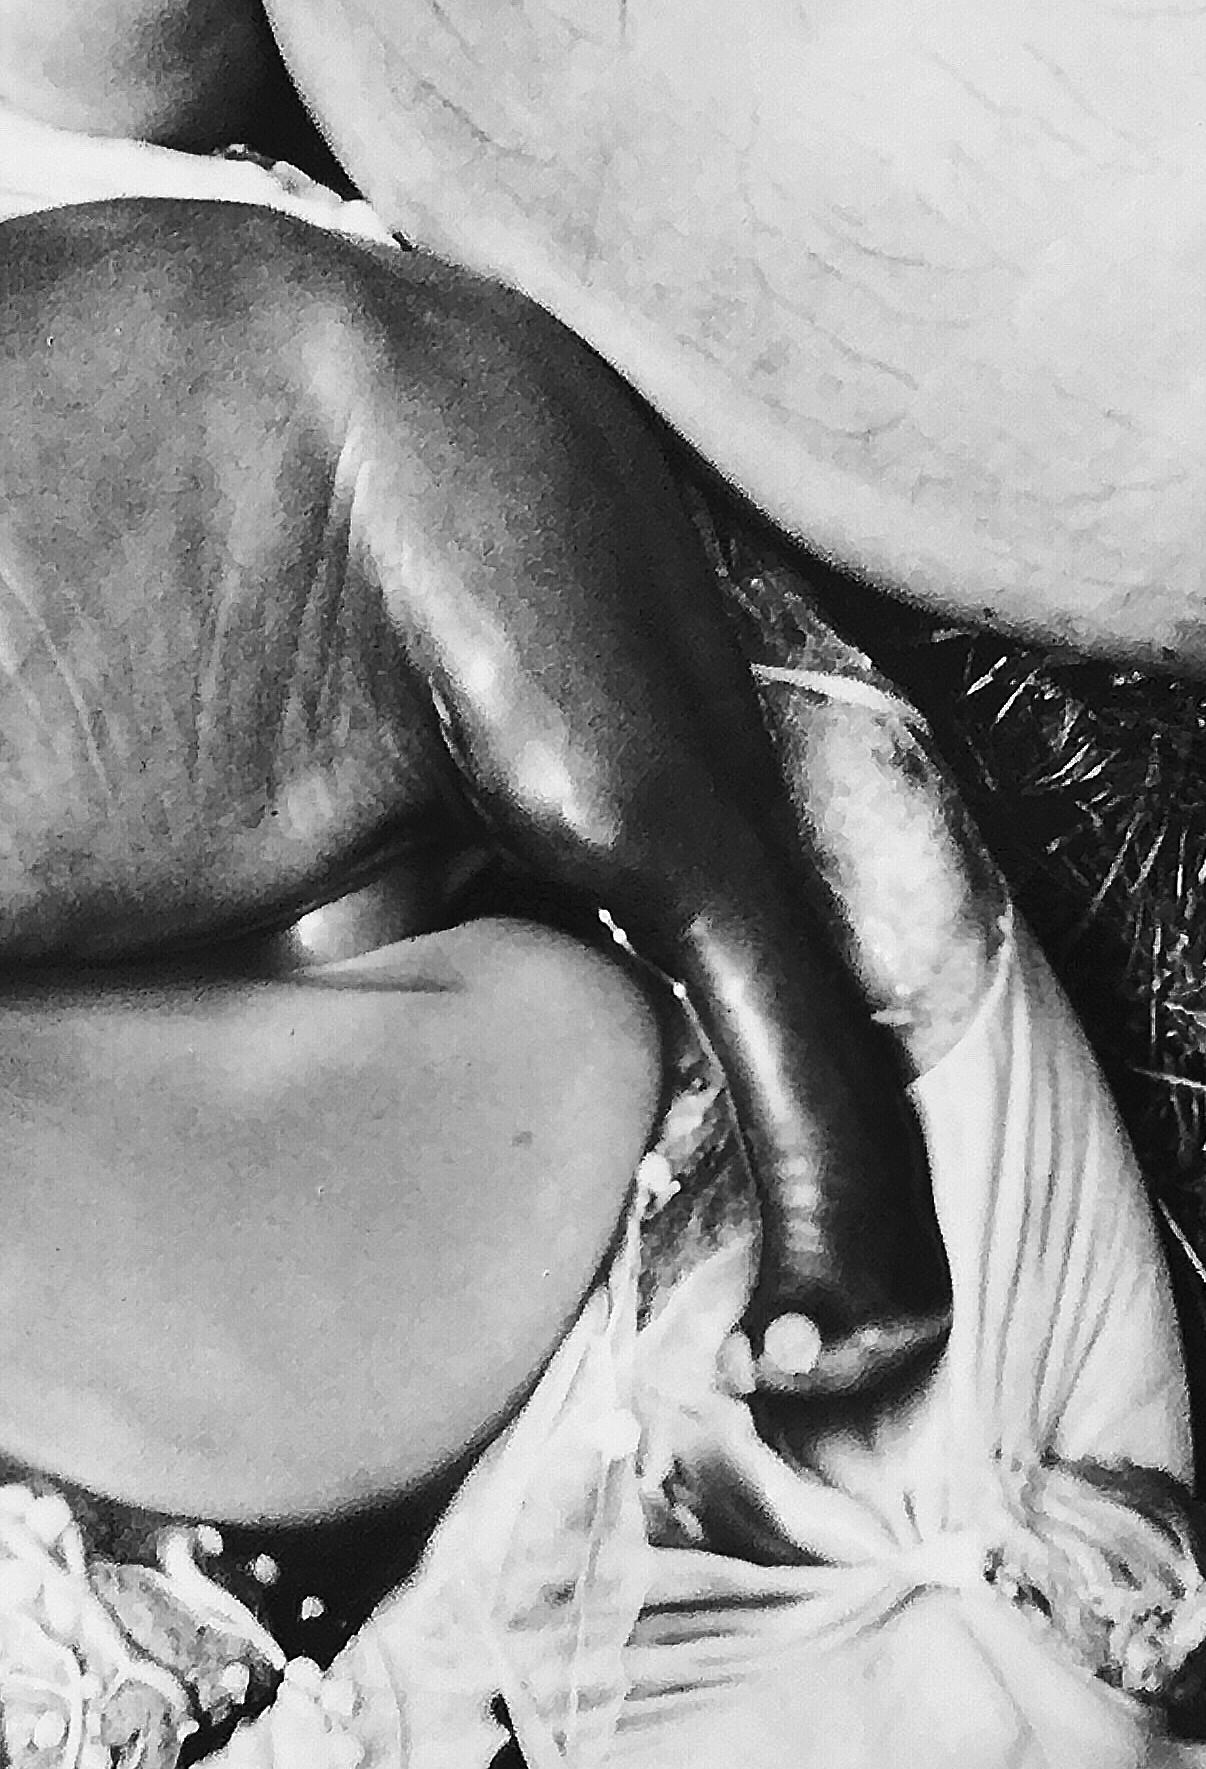 Elephant's Embryo, Uganda
 Peter Beard/Unsigned
The original photograph 